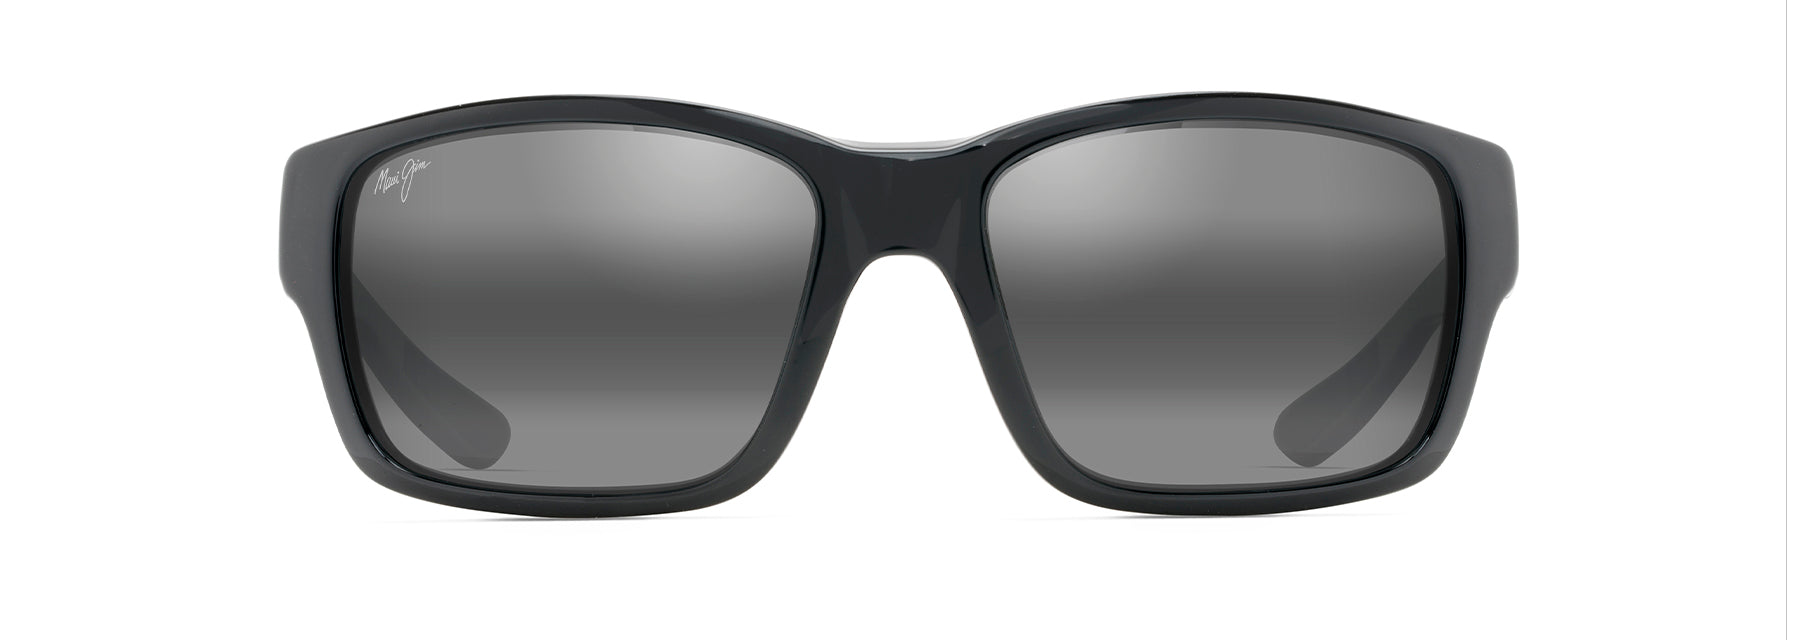 Maui Jim Mangroves Sunglasses